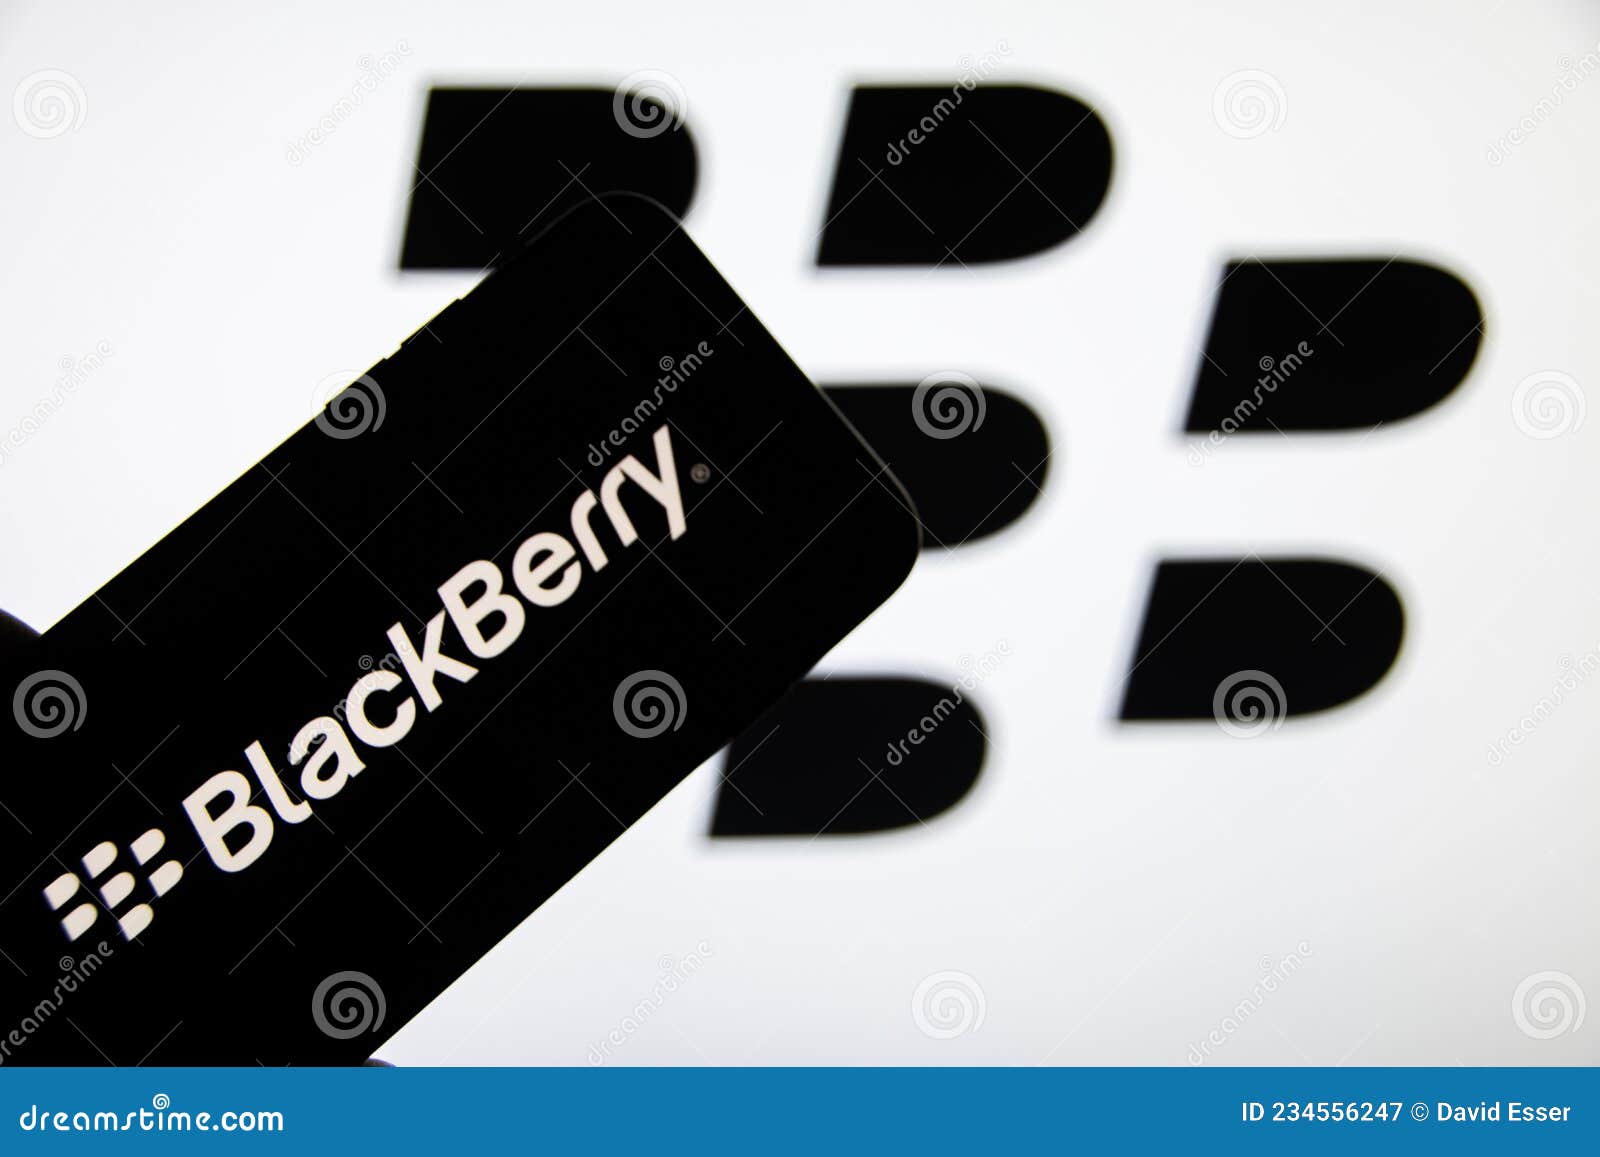 blackberry screen symbols